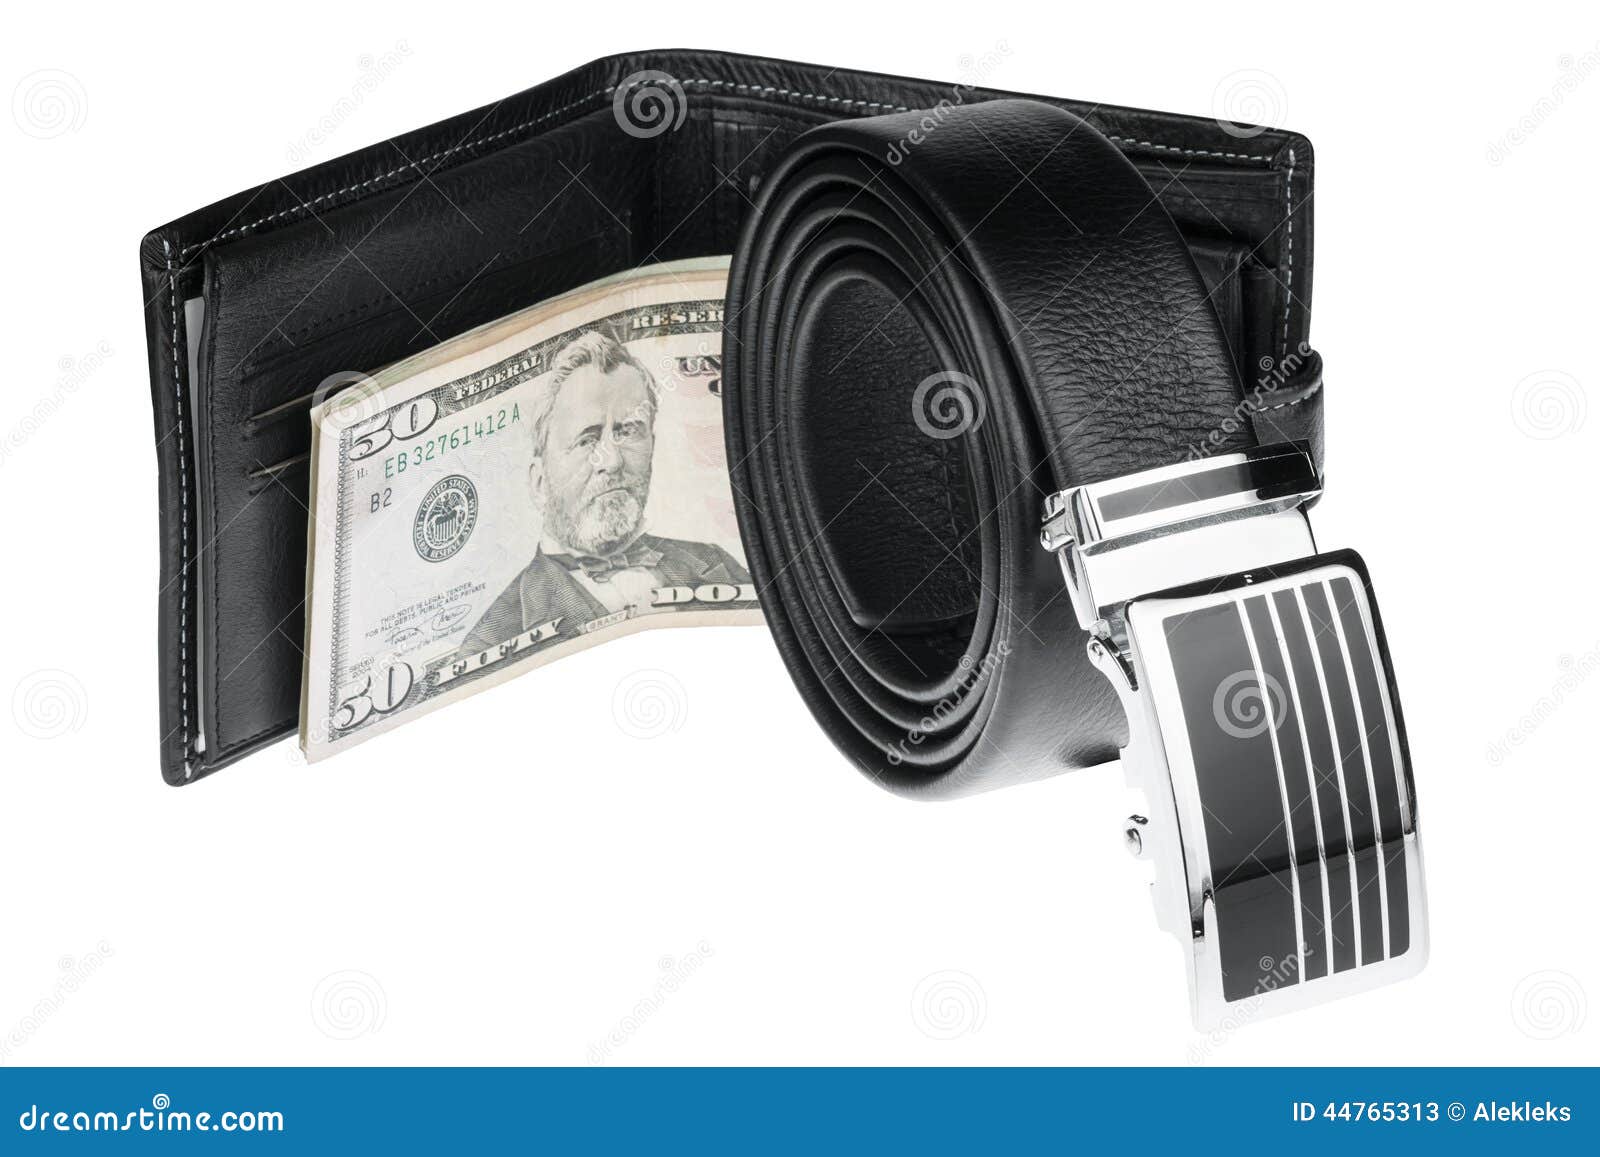 Men S Belt, Wallet with Money Stock Image - Image of belt, male: 44765313